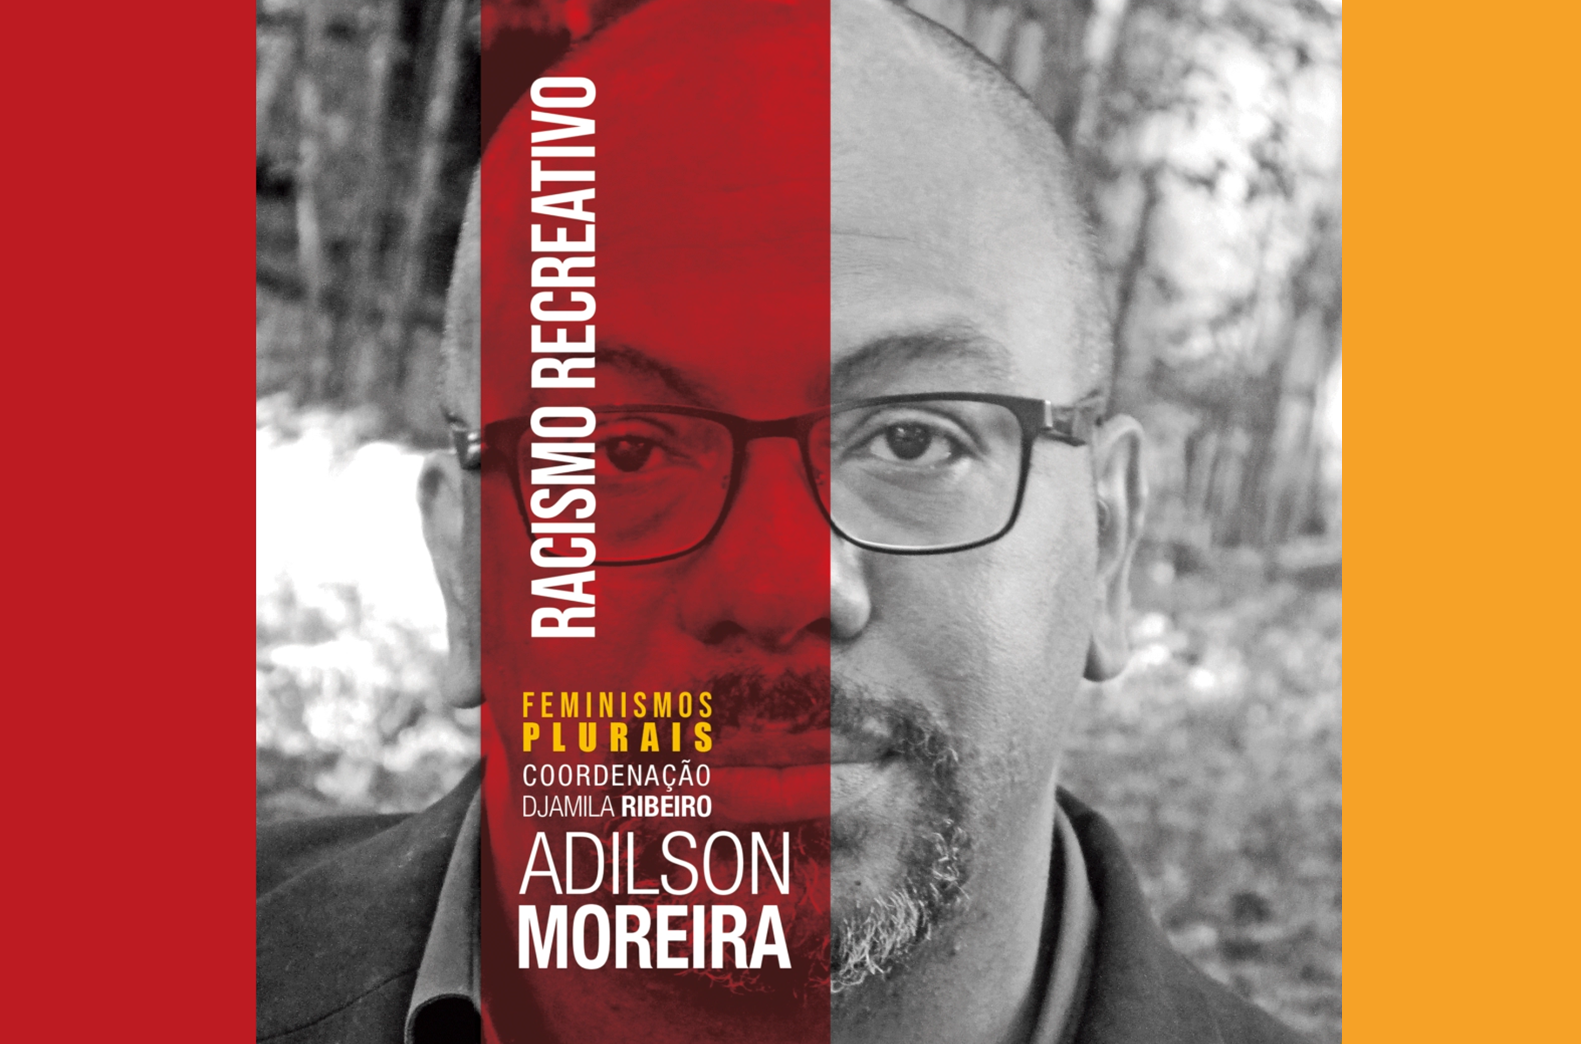 Adilson Moreira